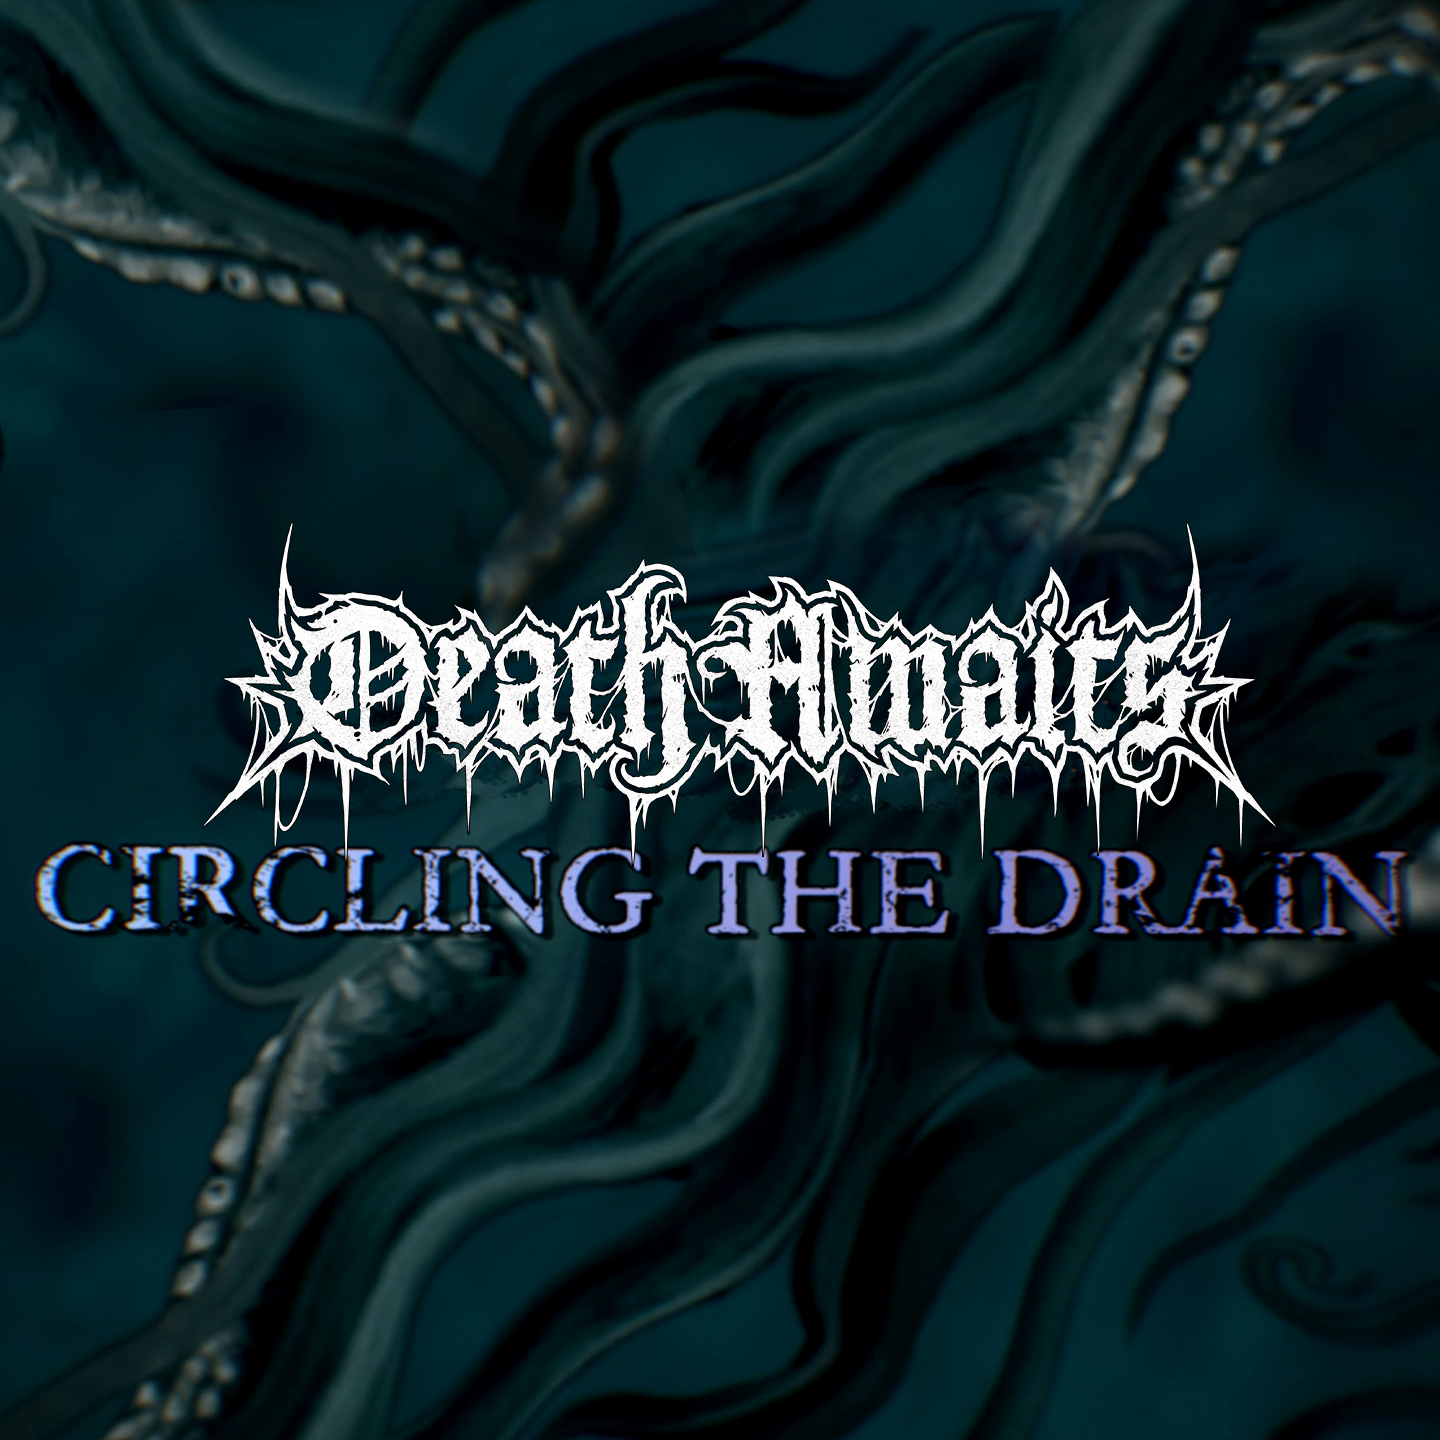 Circling The Drain (single)